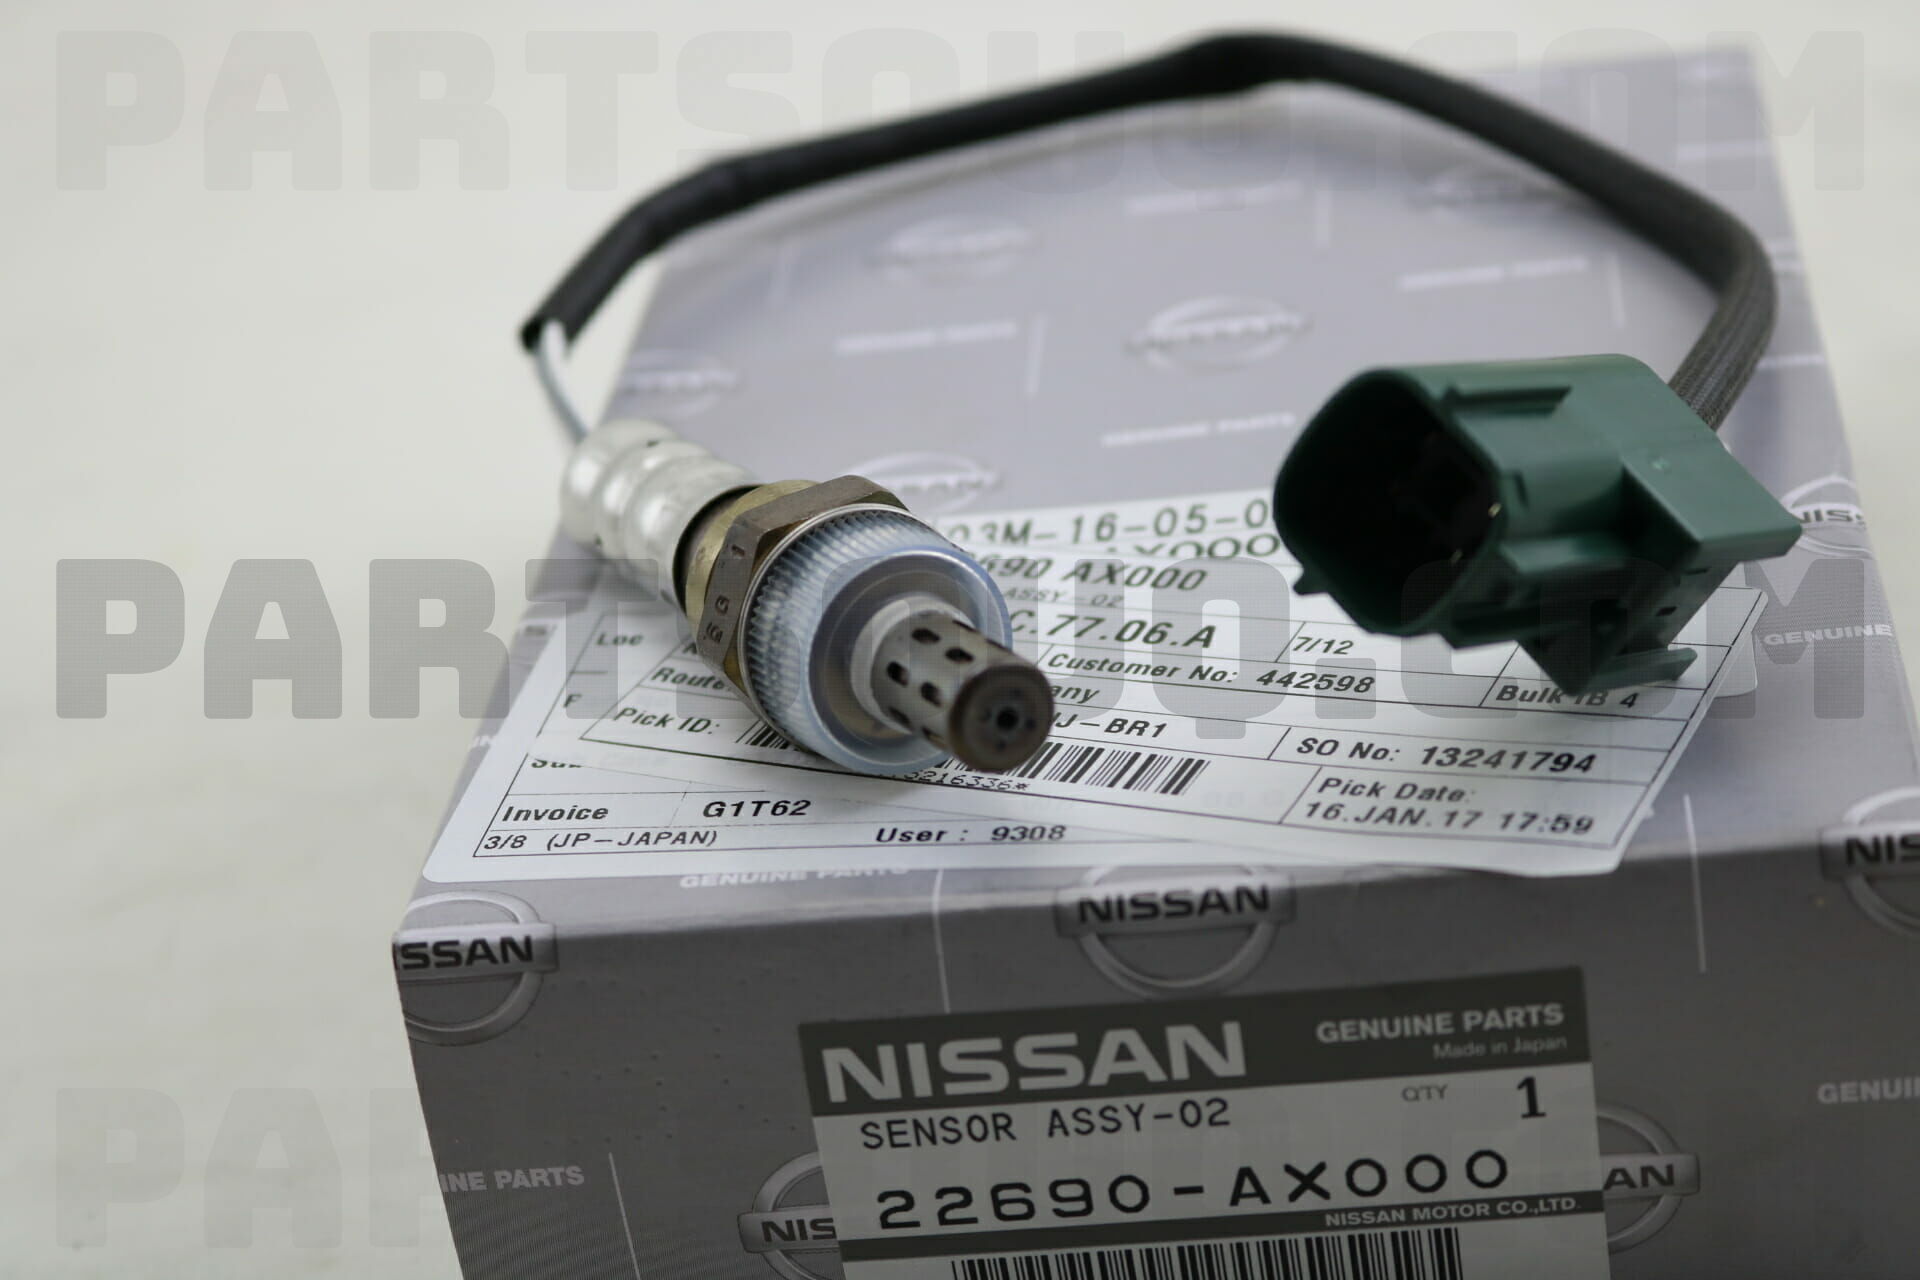 22690AX000 Nissan HEATED OXYGEN SENSOR, Price 81.07